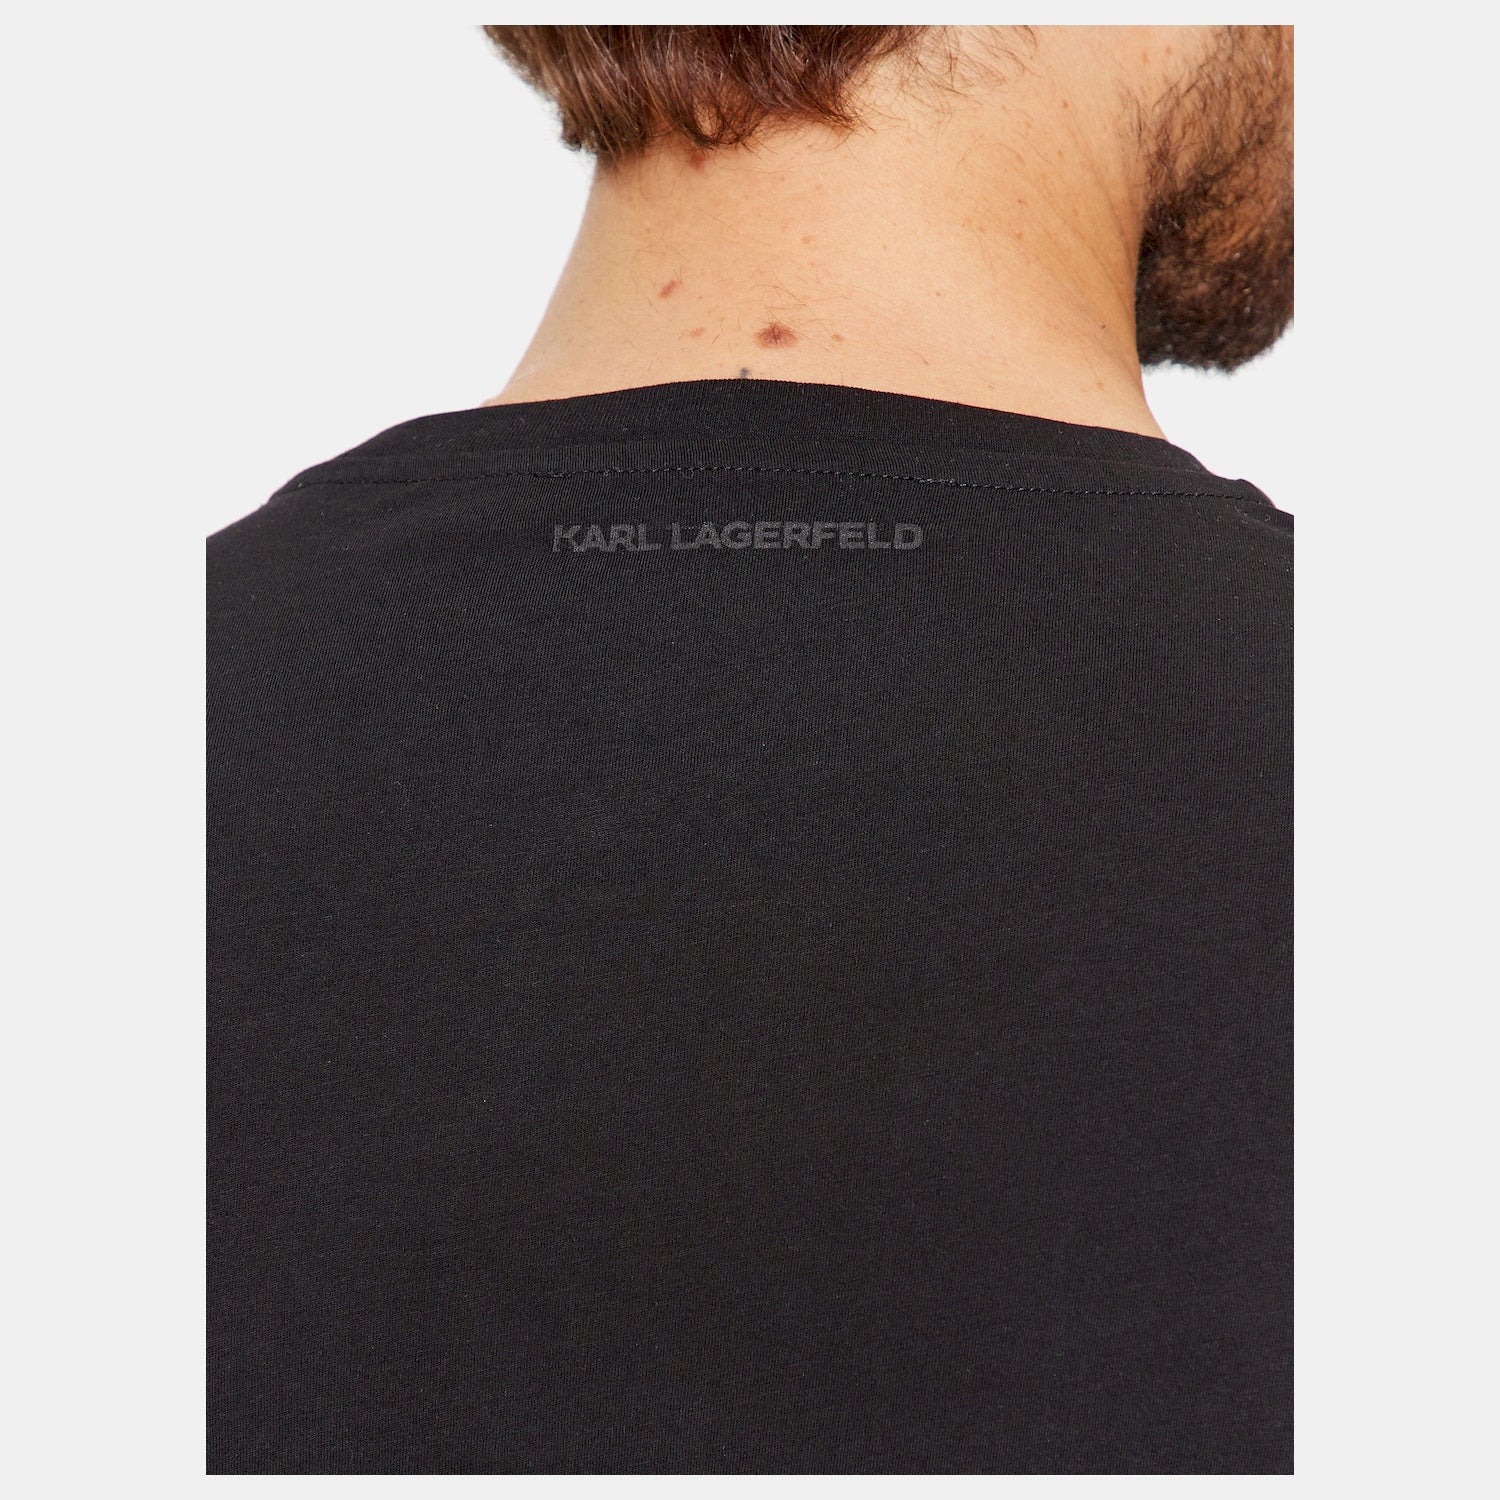 Karl Lagerfeld T Shirt Kl755071 Black Preto_shot3